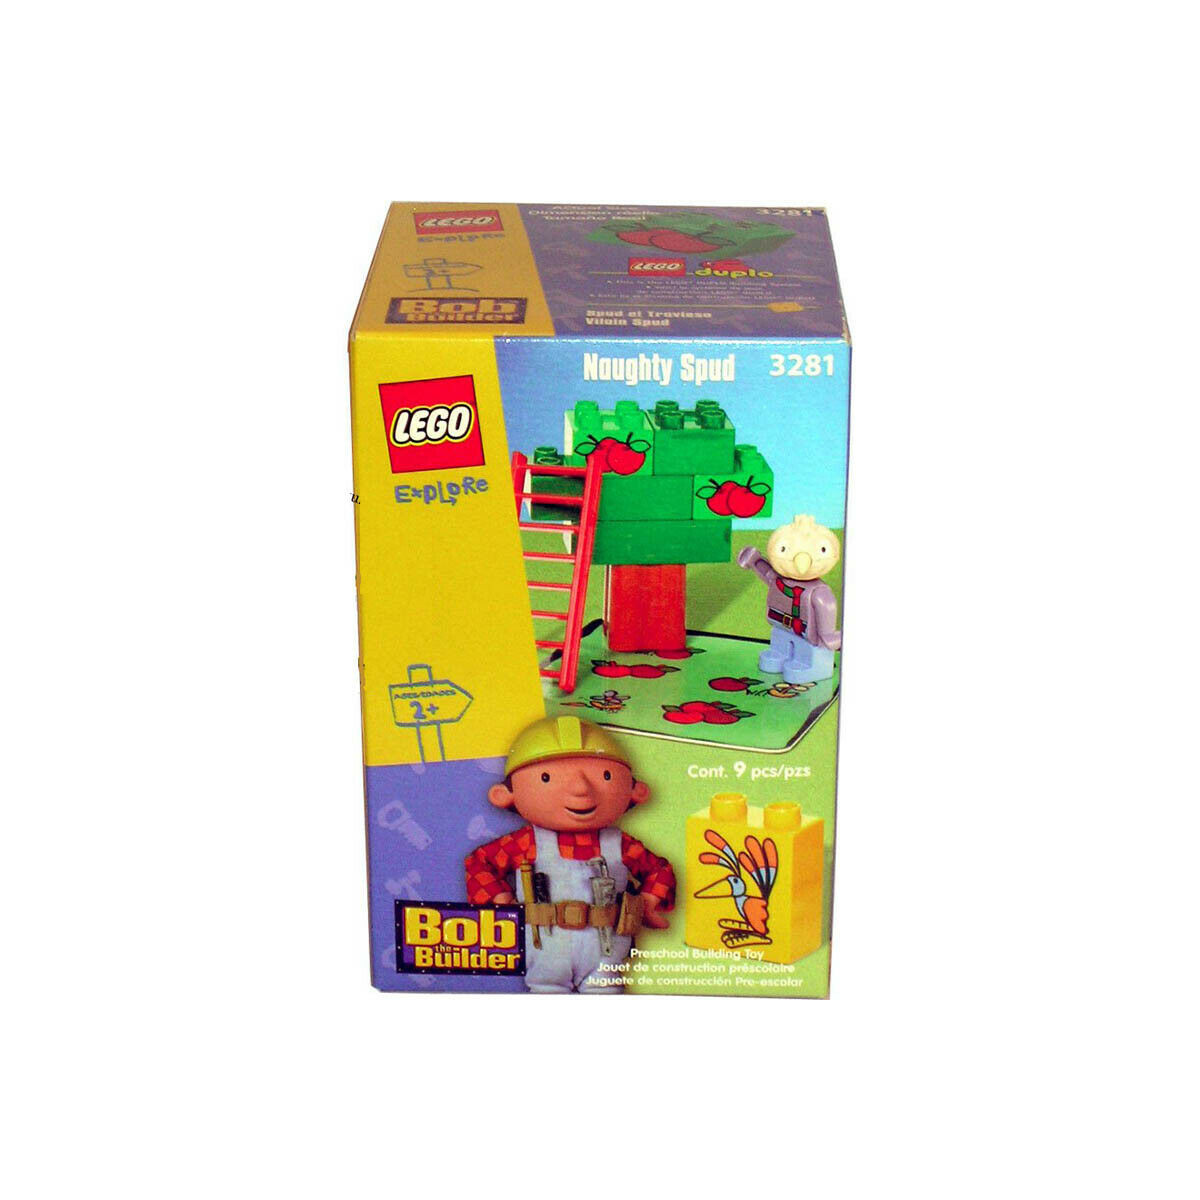 LEGO Explore Bob the Builder Naughty Spud - 3281